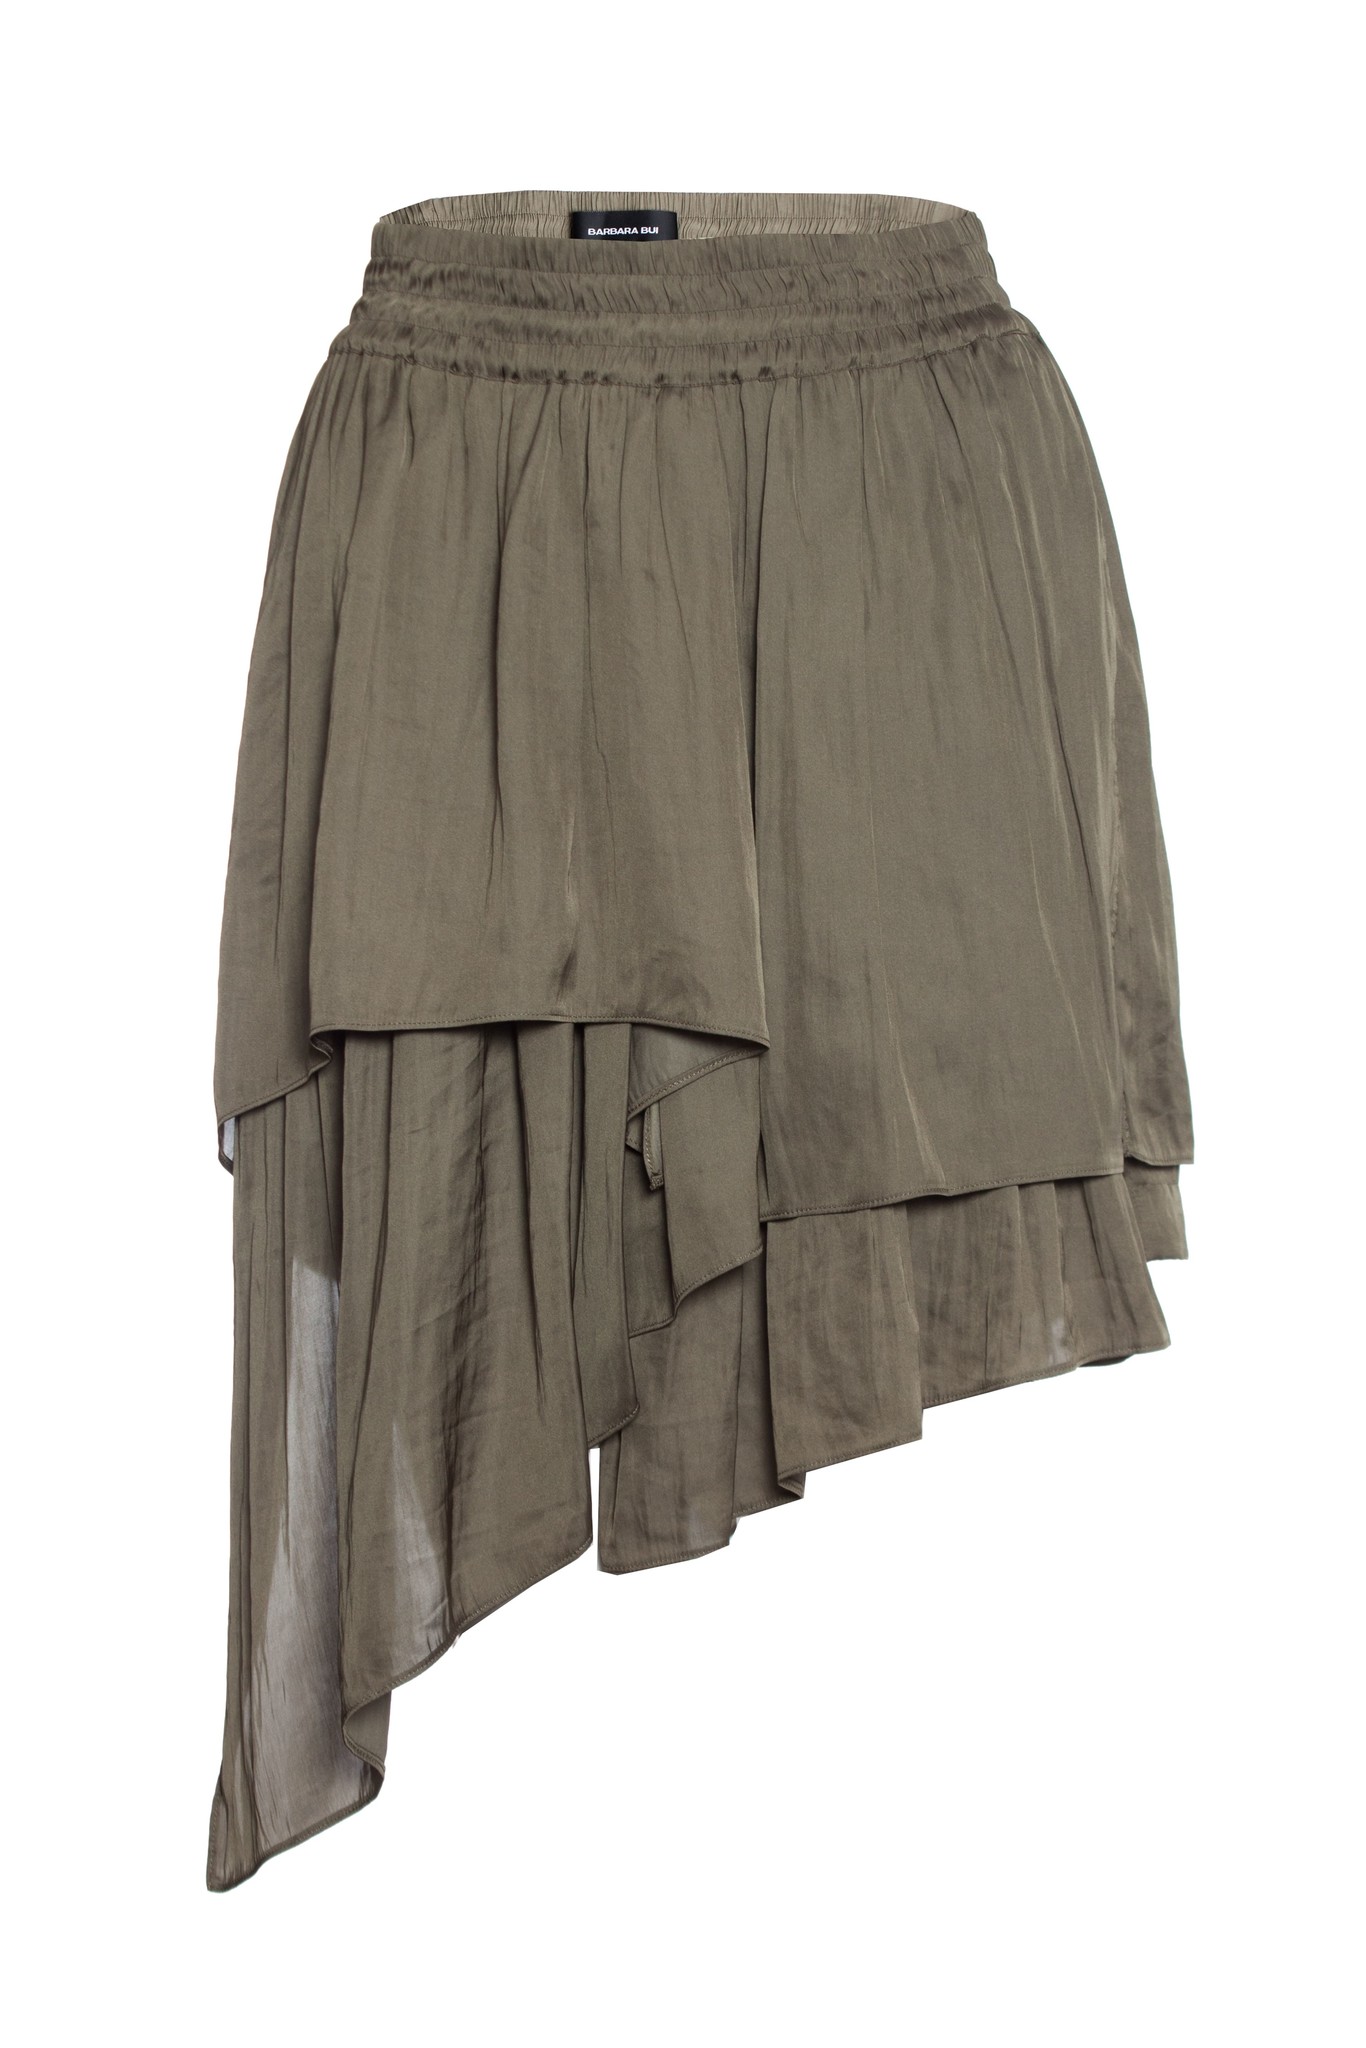 Barbara Bui, Layered Asymmetric green skirt. - Unique Designer Pieces